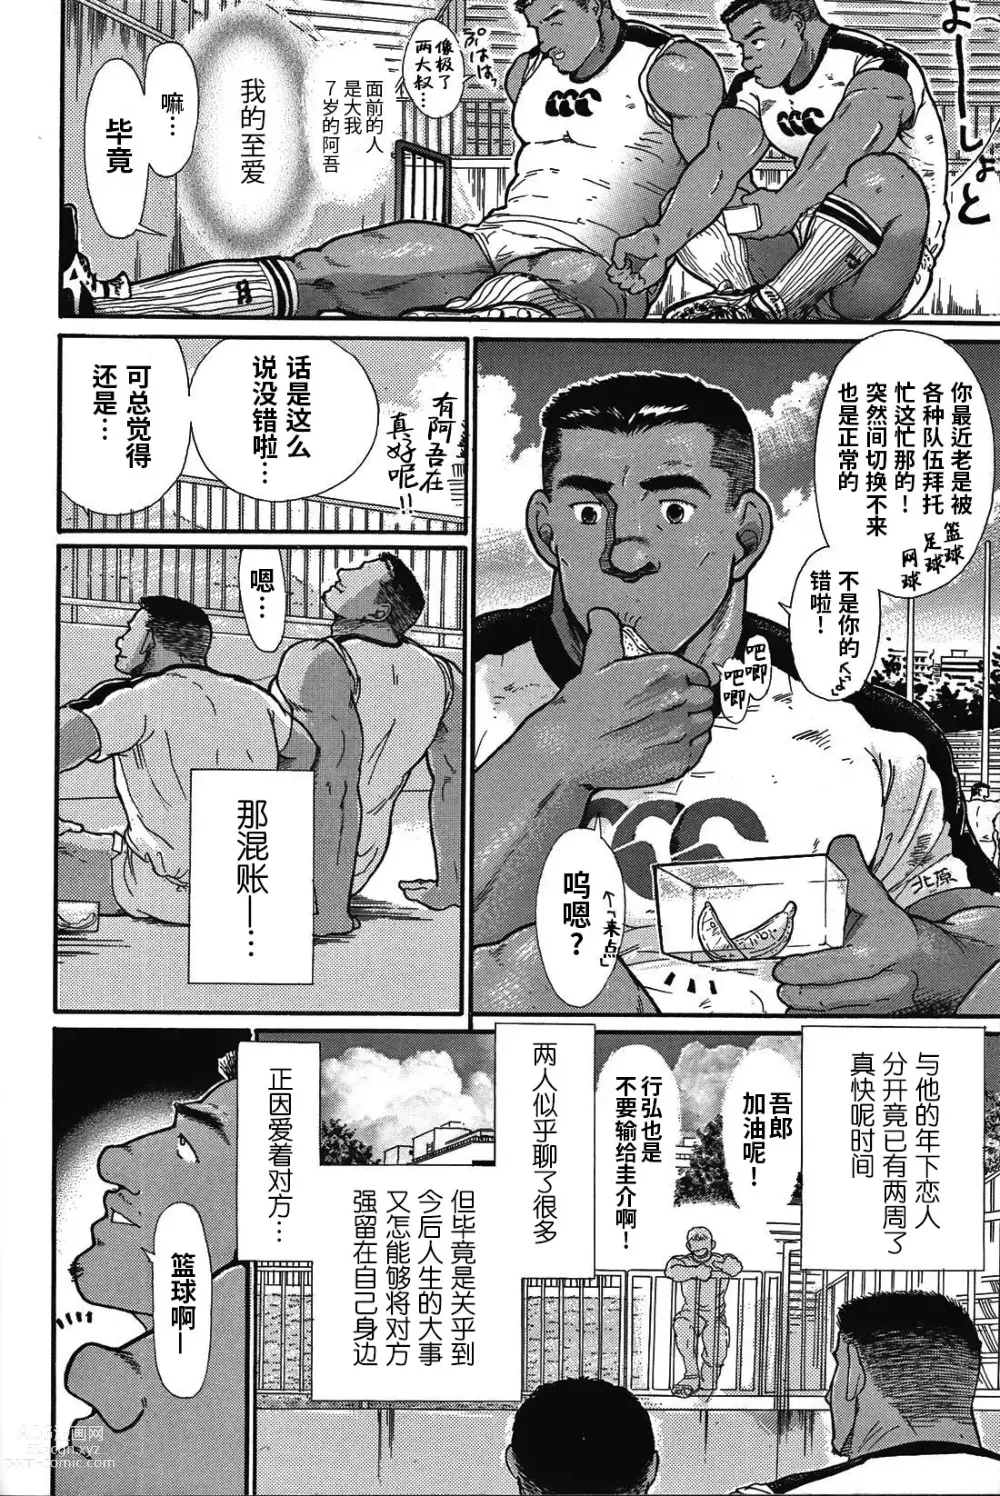 Page 7 of manga 纯情!! 第三章 「纯真」